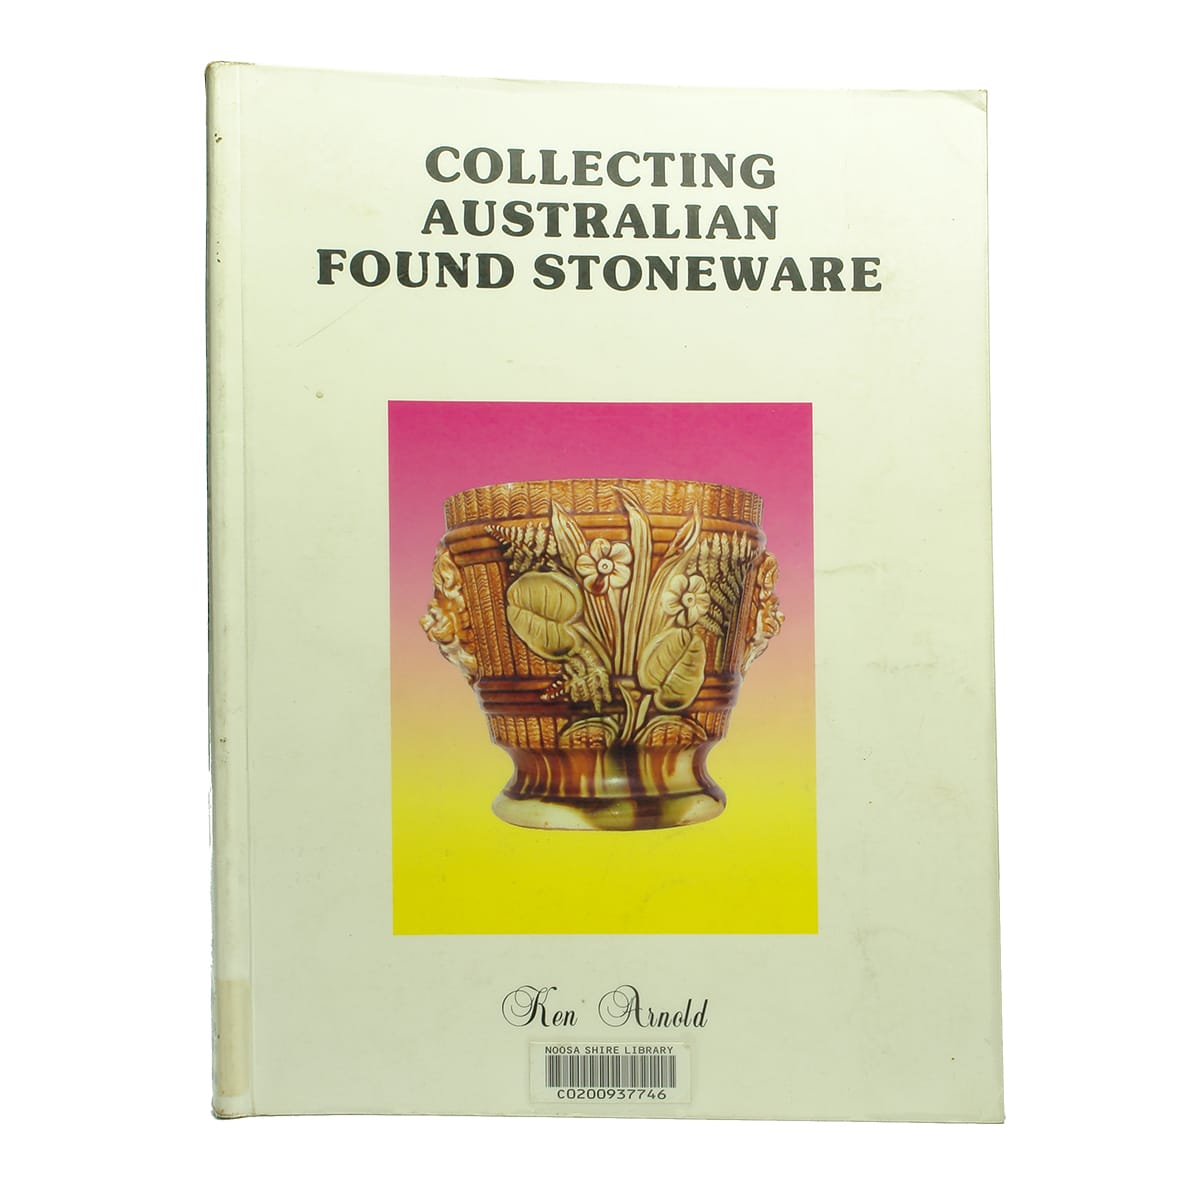 Collecting Australian Found Stoneware, by Ken Arnold.